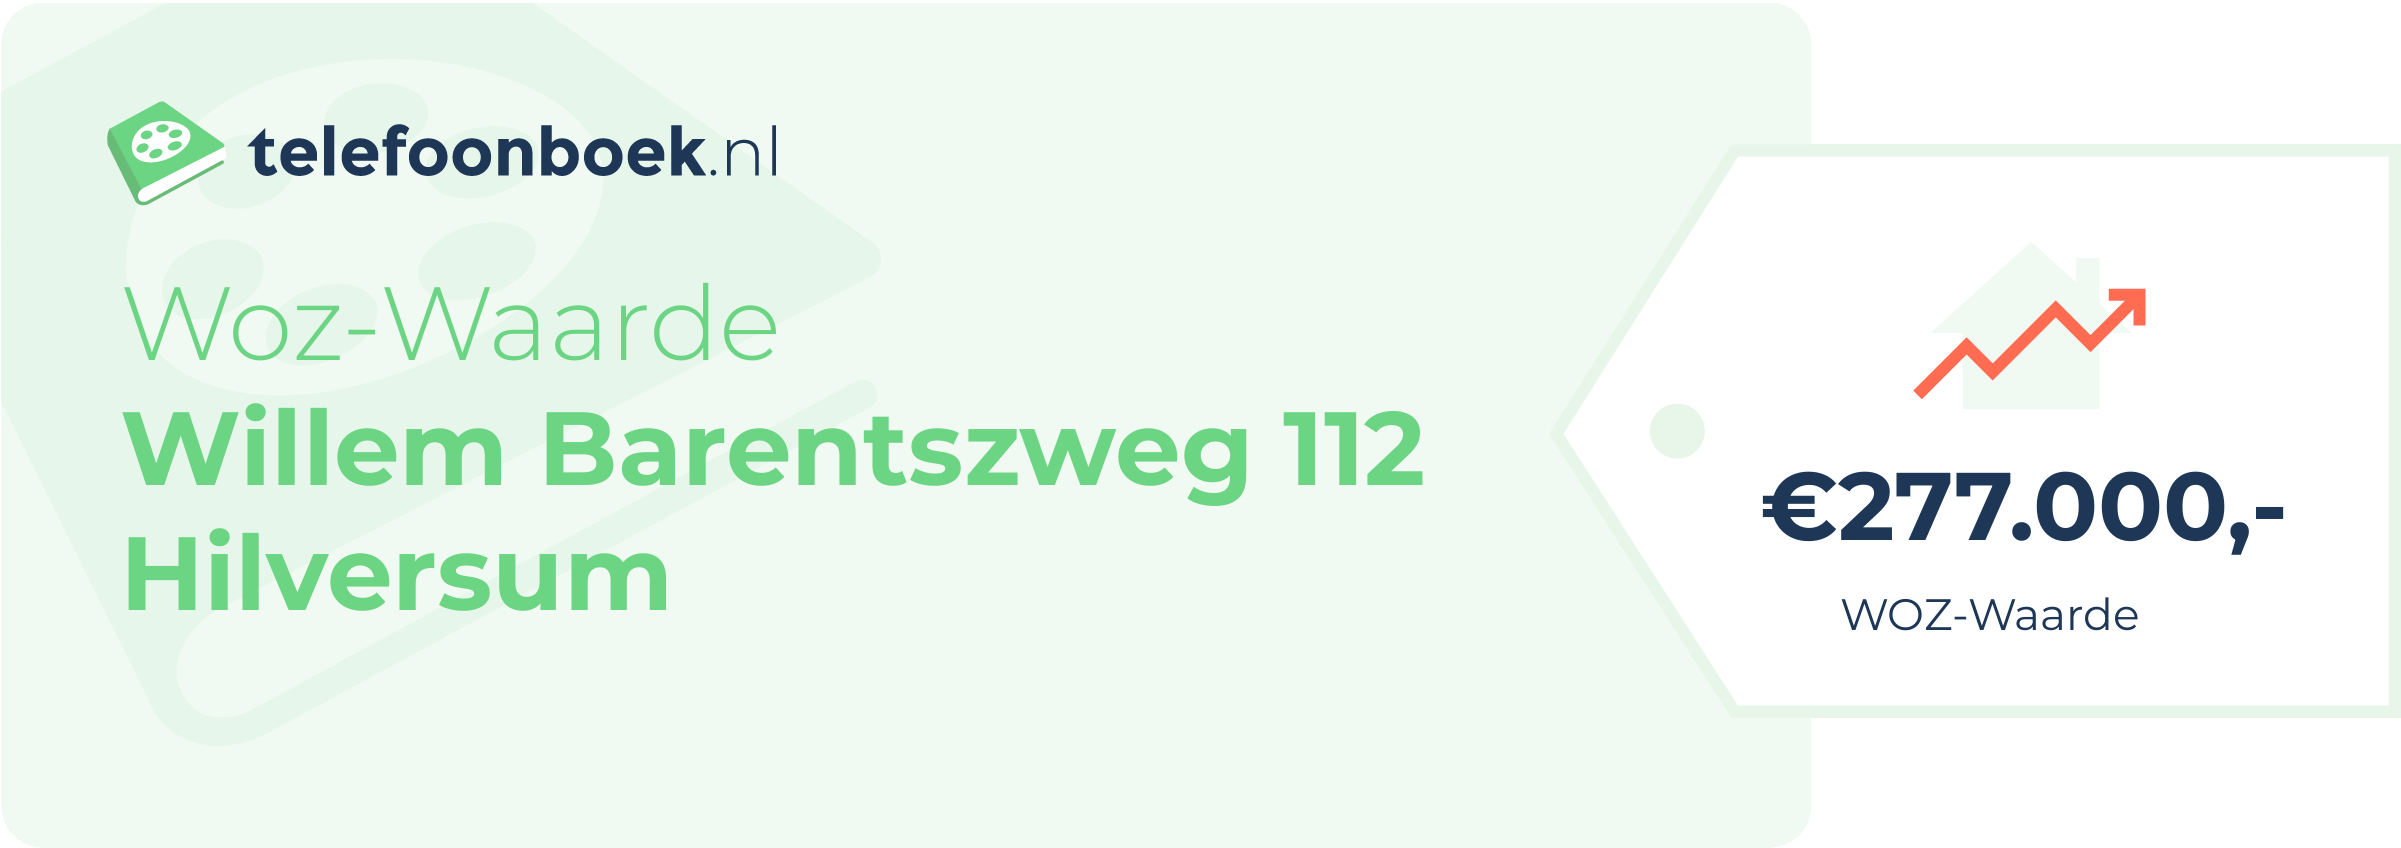 WOZ-waarde Willem Barentszweg 112 Hilversum